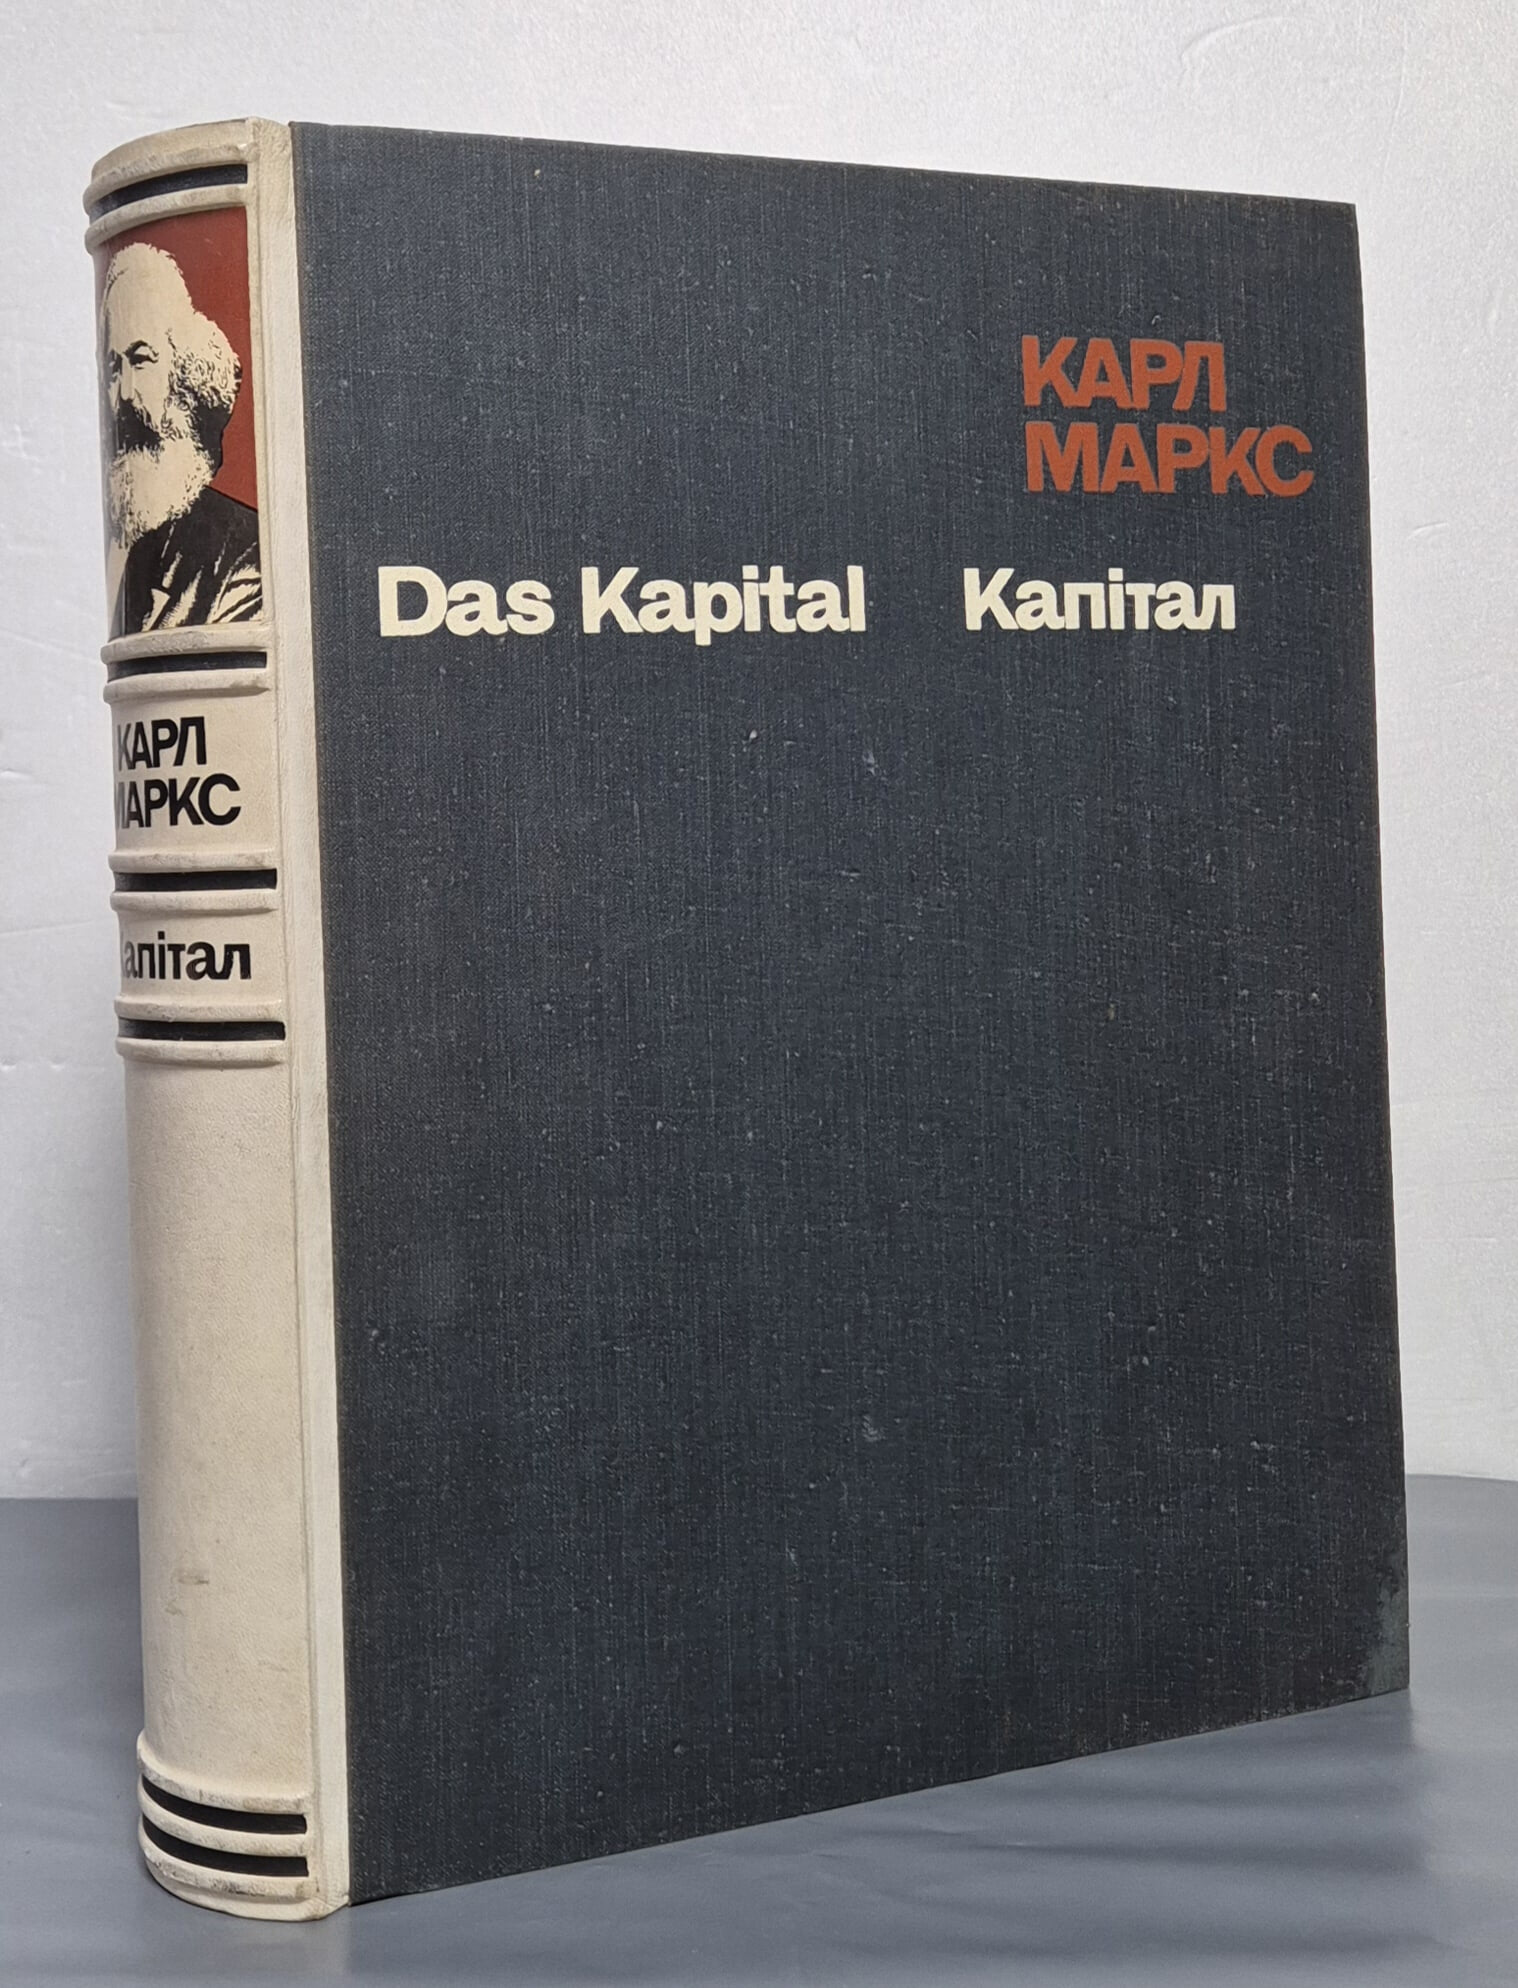 Das Kapital  - Карл Маркс  капитал  칼 마르크스 자본론 (우크라이나어) 